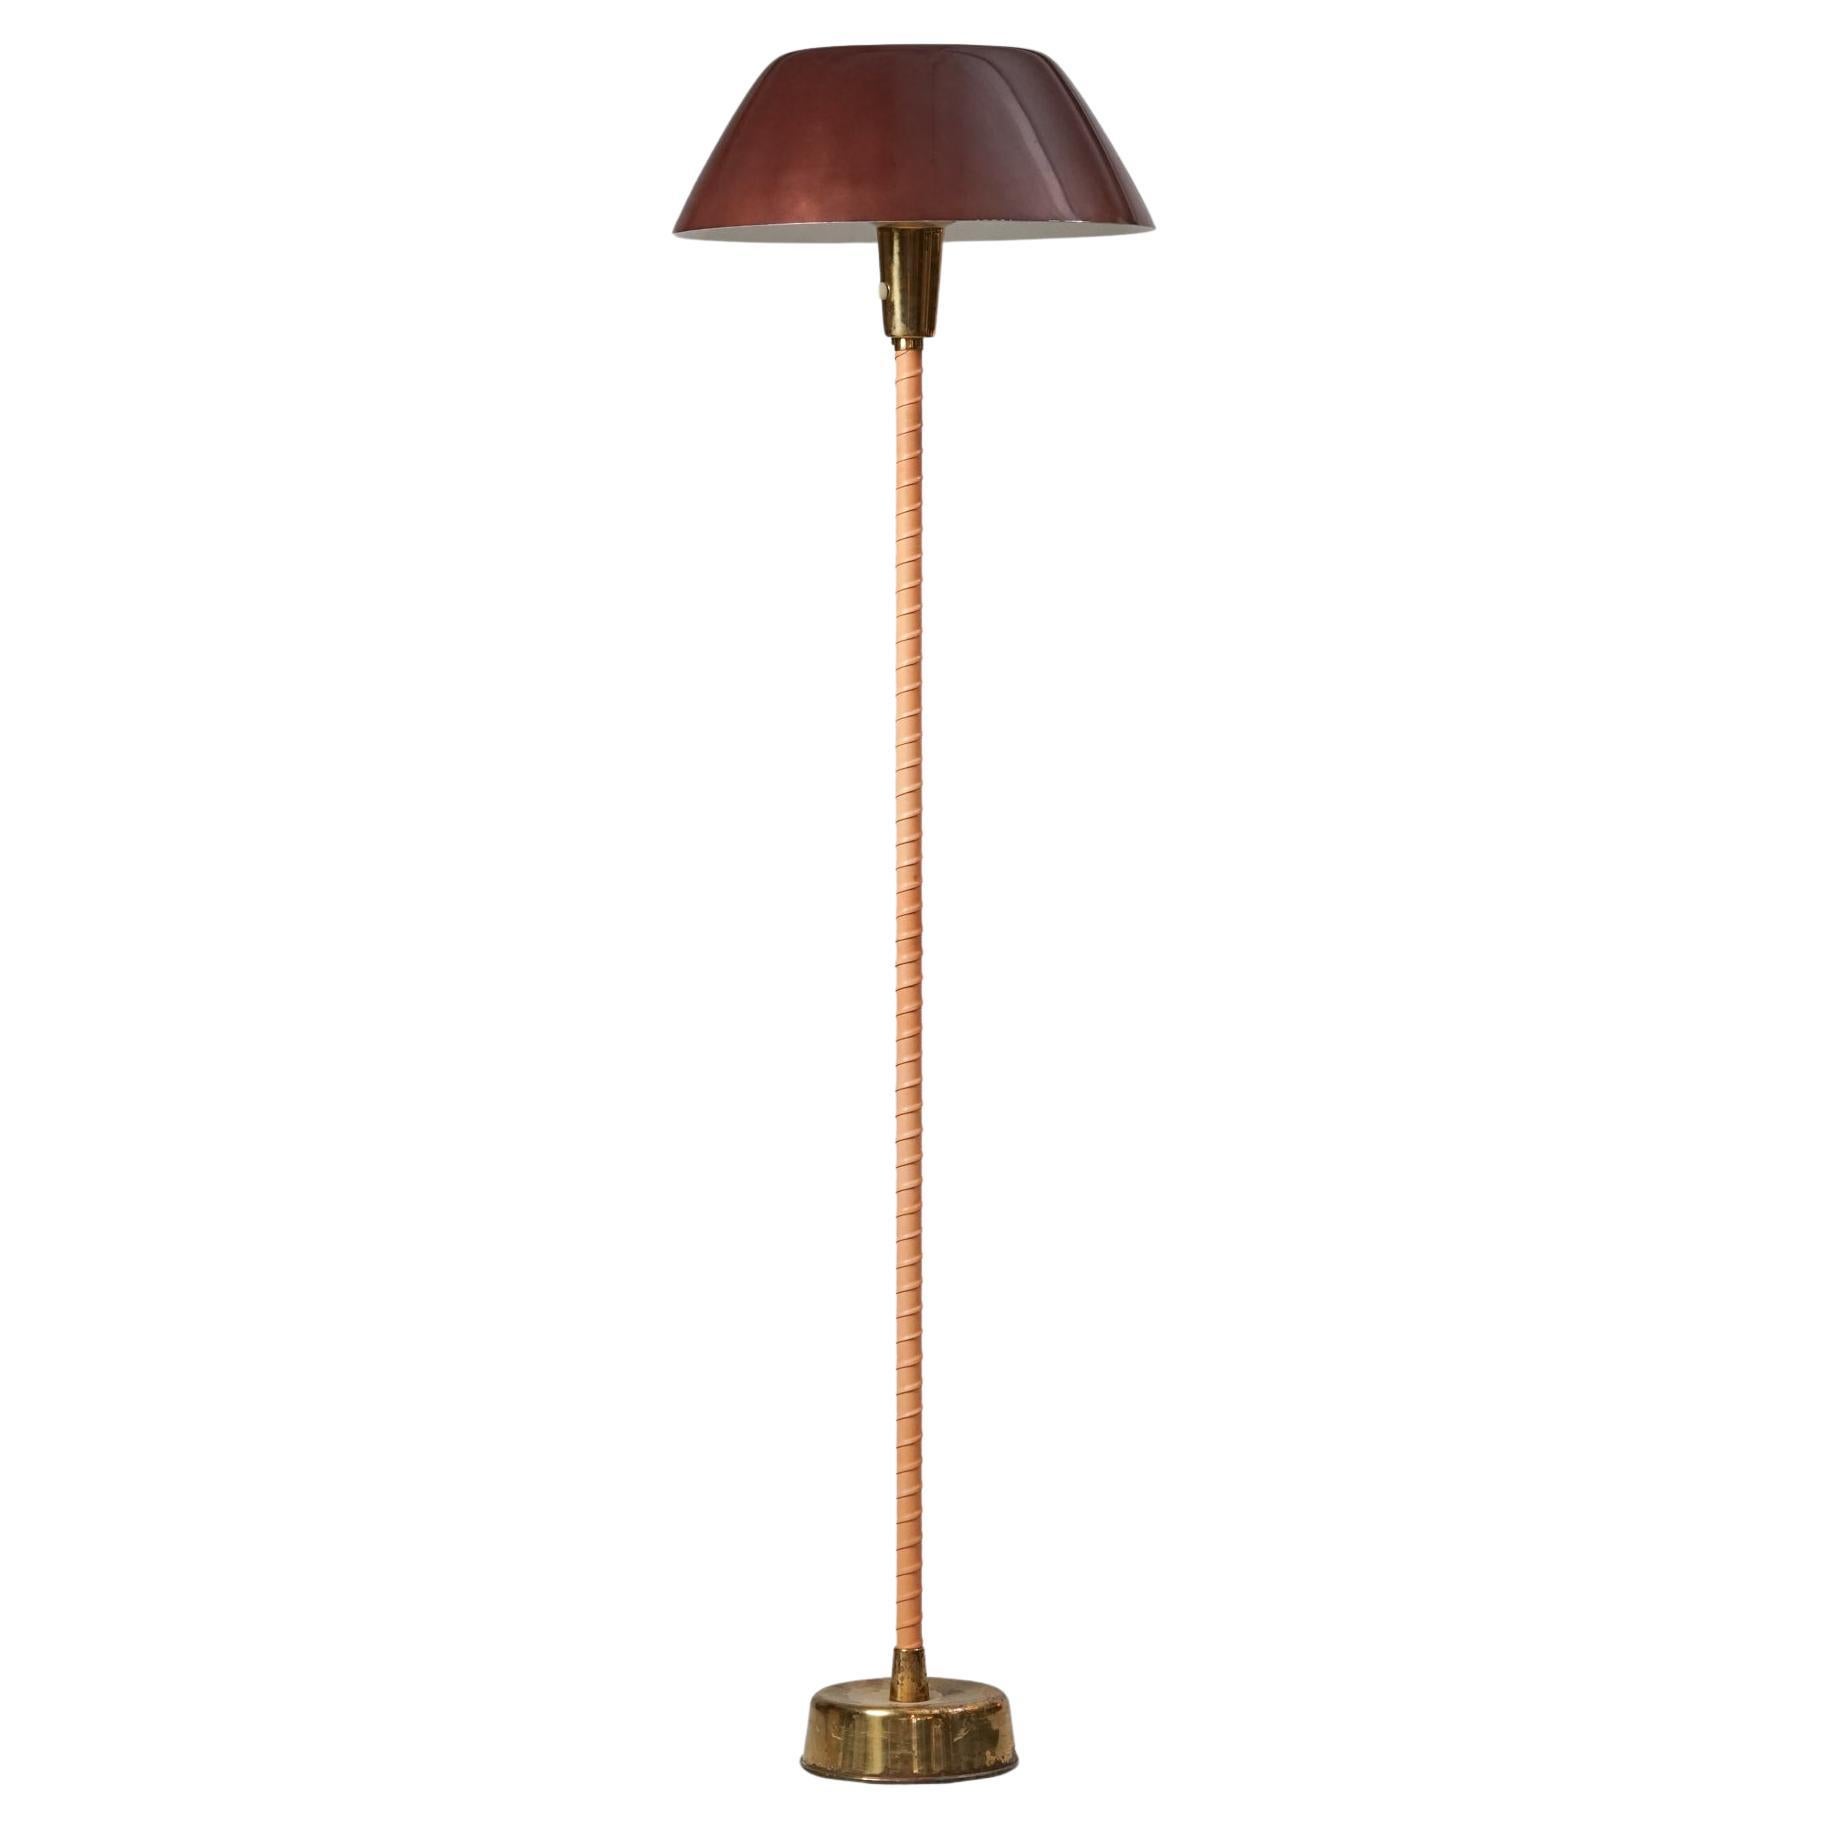  Senator Floor Lamp by Lisa Johansson-Pape for Orno, 1950s For Sale